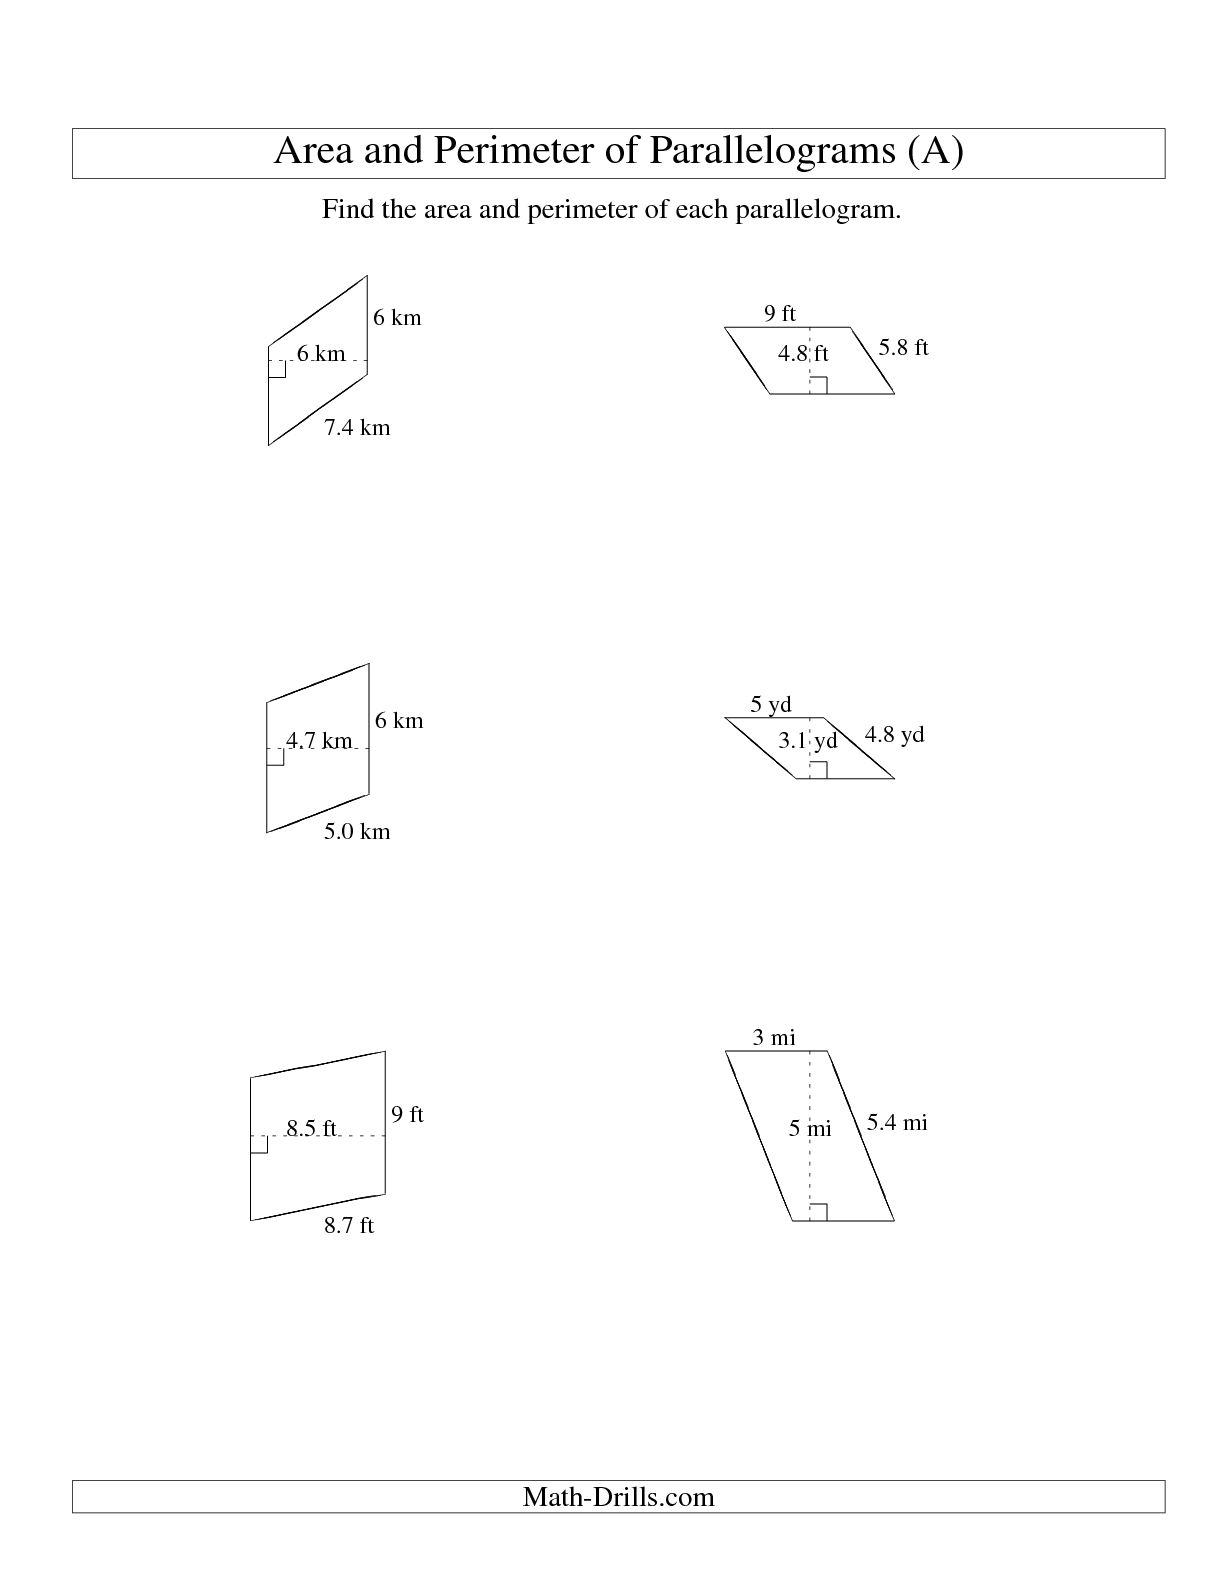 Parallelogram Area and Perimeter Worksheets Image